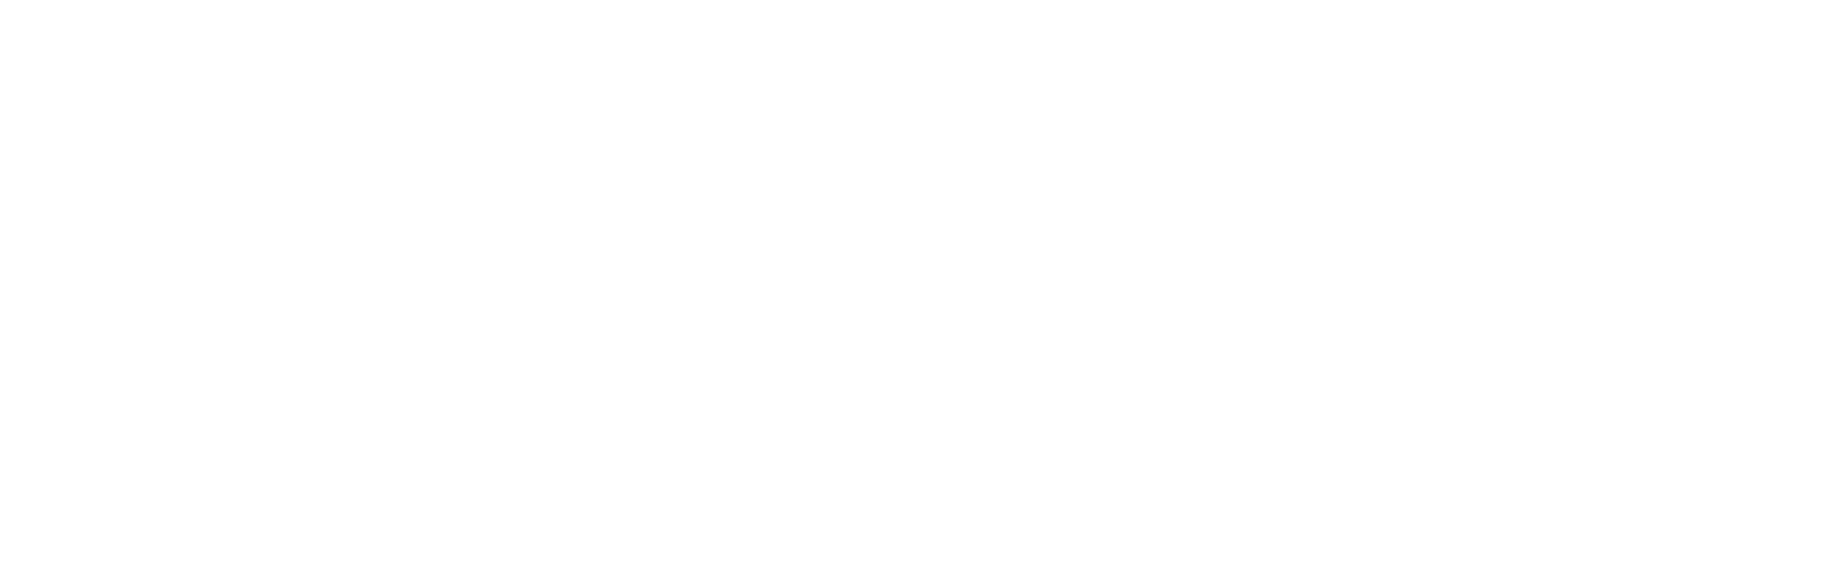 AFM Inspections & Engineering, PLLC Logo